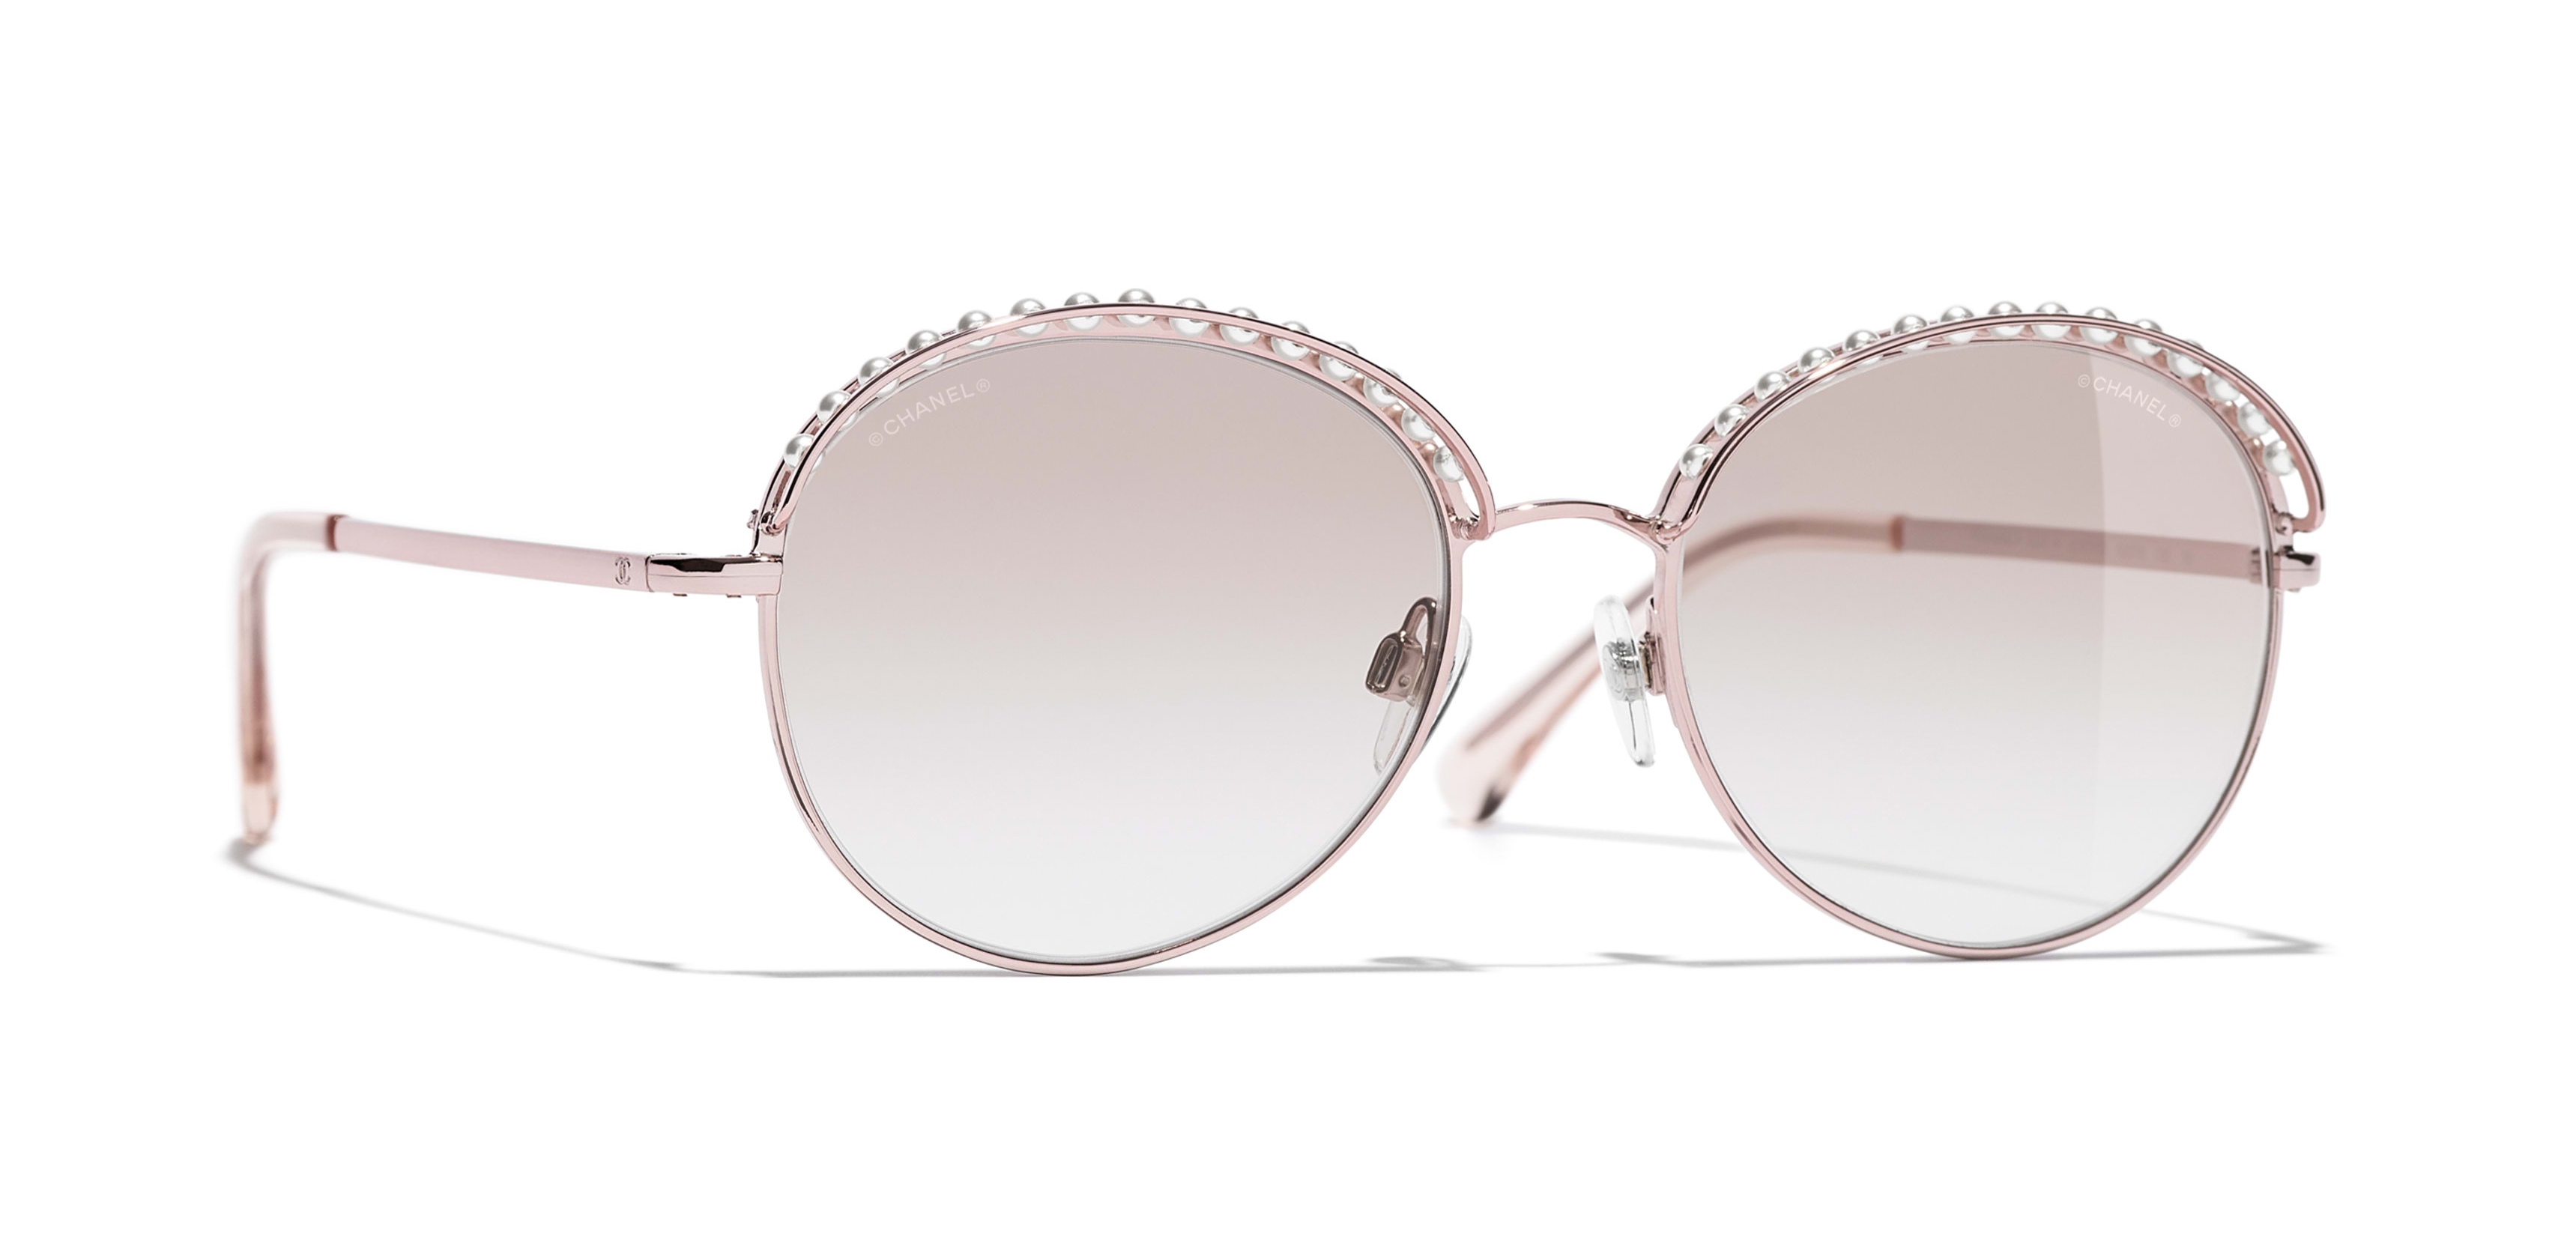 Chanel - Round Sunglasses - Pink Gold - Chanel Eyewear - Avvenice